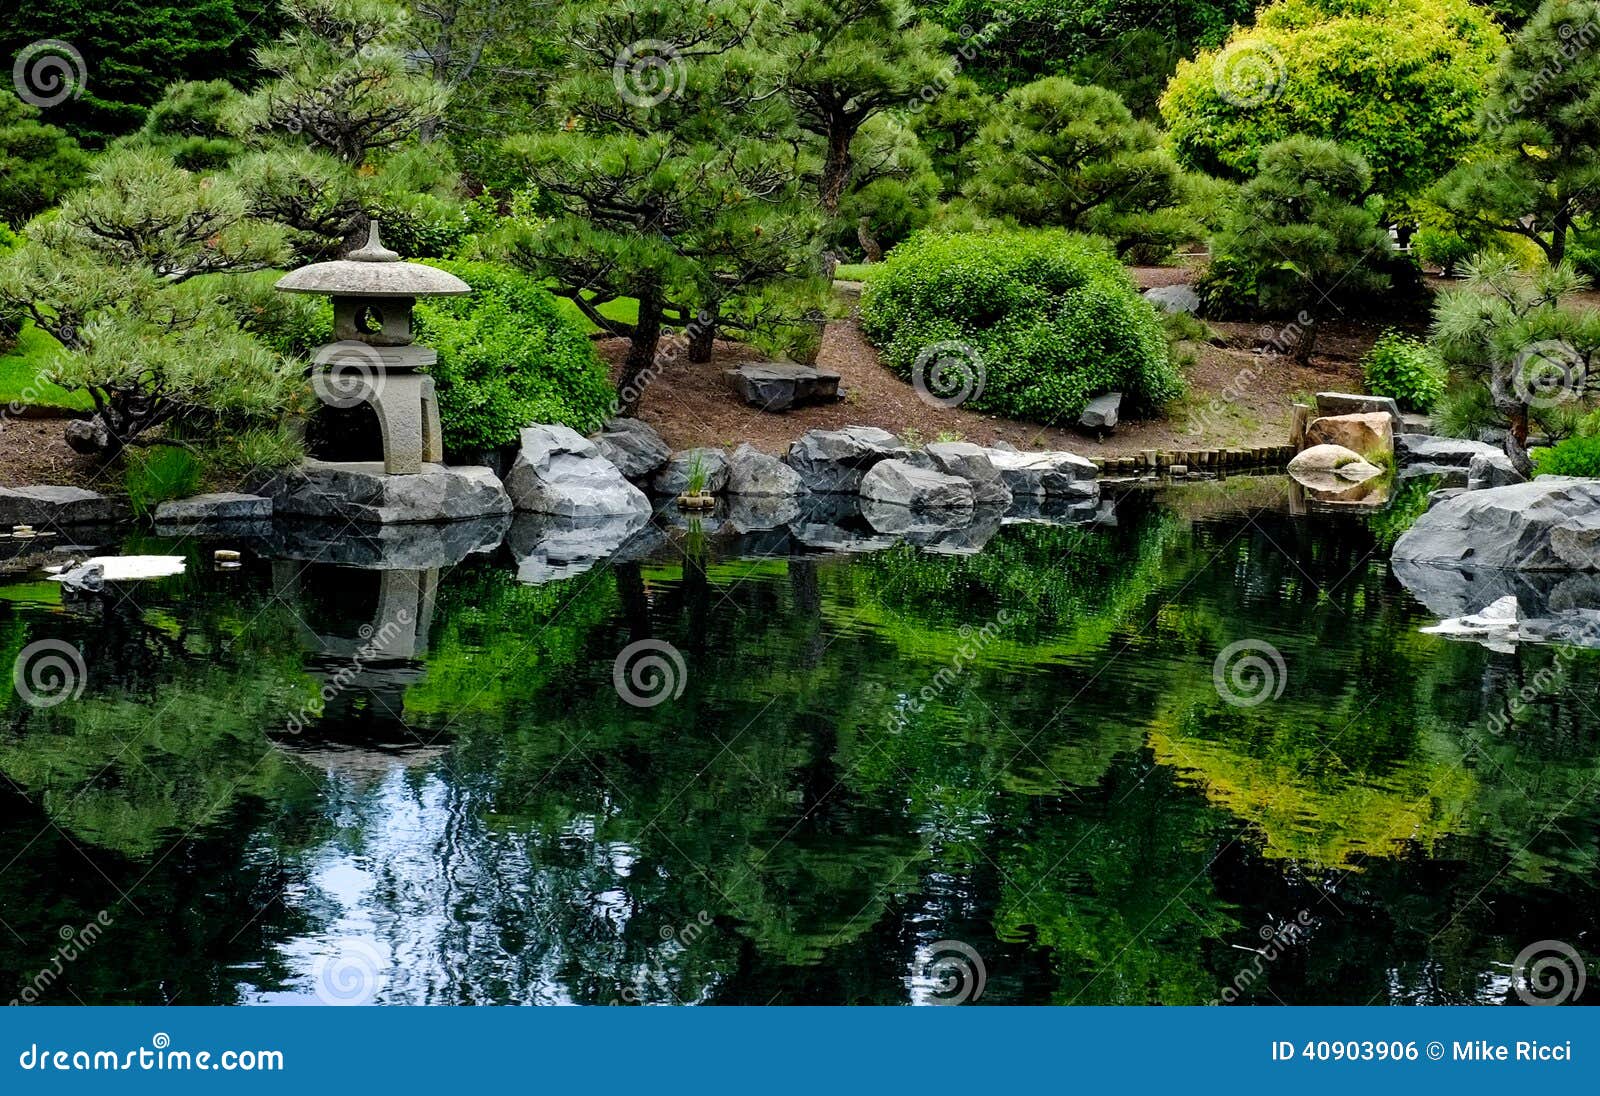 Japanese tea Garden stock photo. Image of garden, water - 40903906